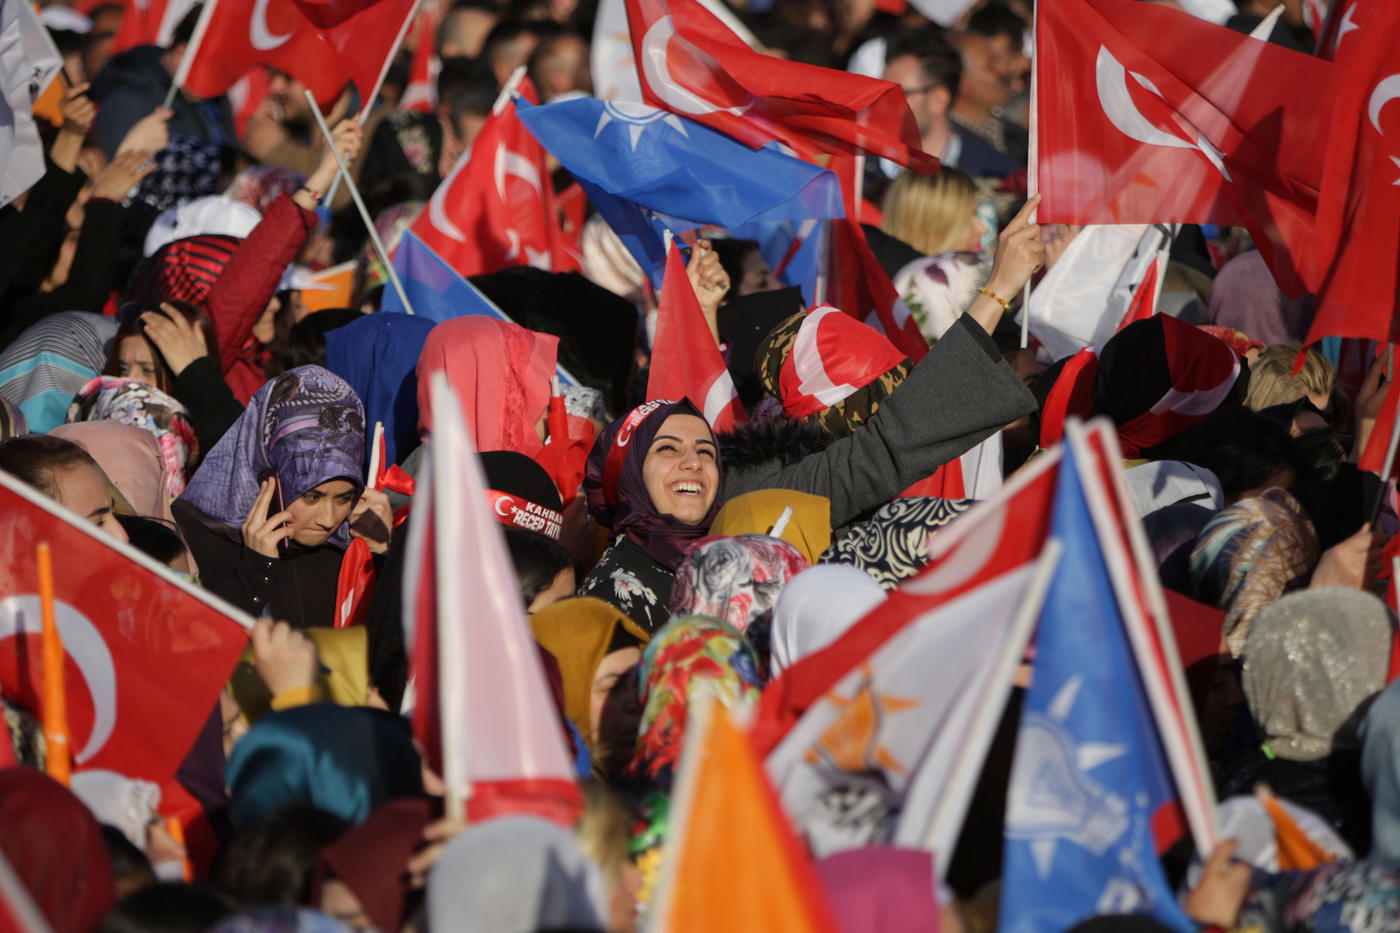 AKP rally